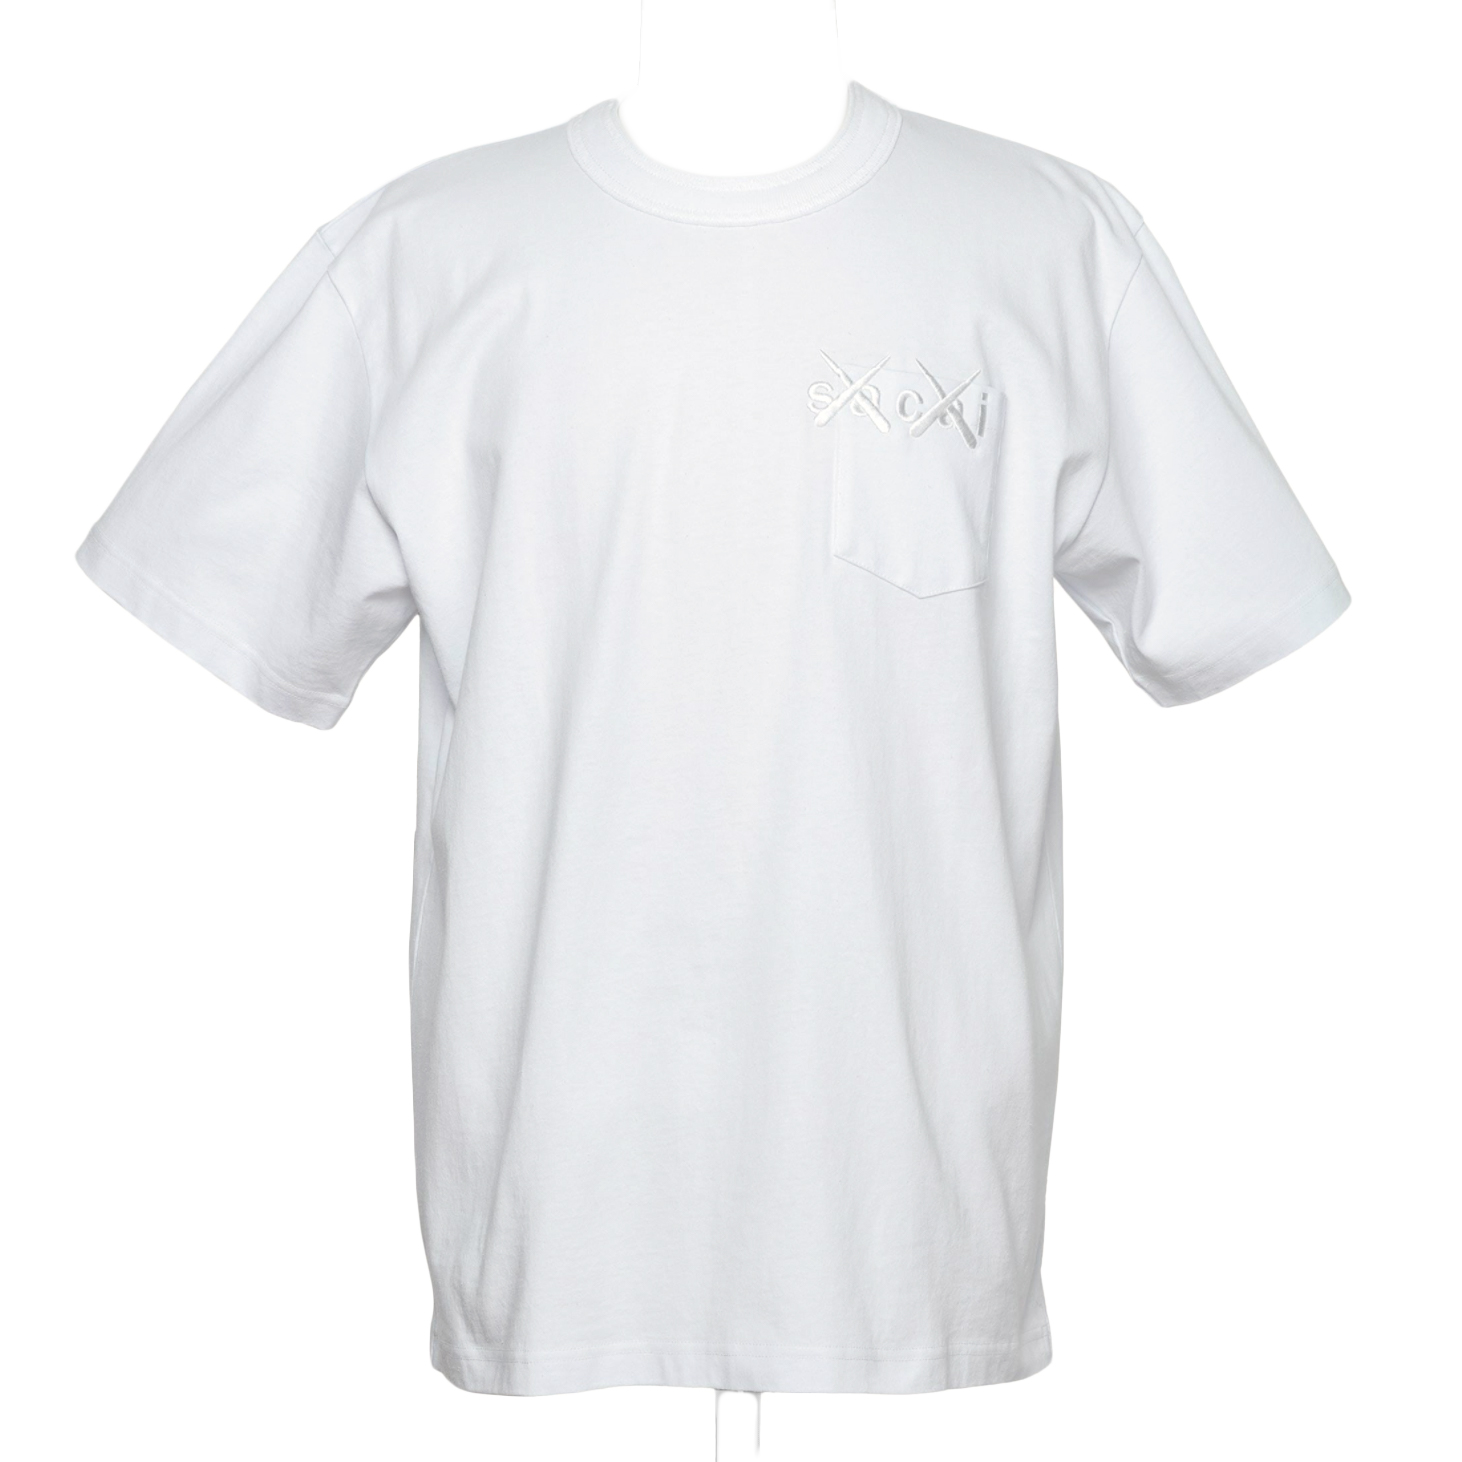 KAWS x Sacai Embroidery Tee White x White メンズ - FW21 - JP